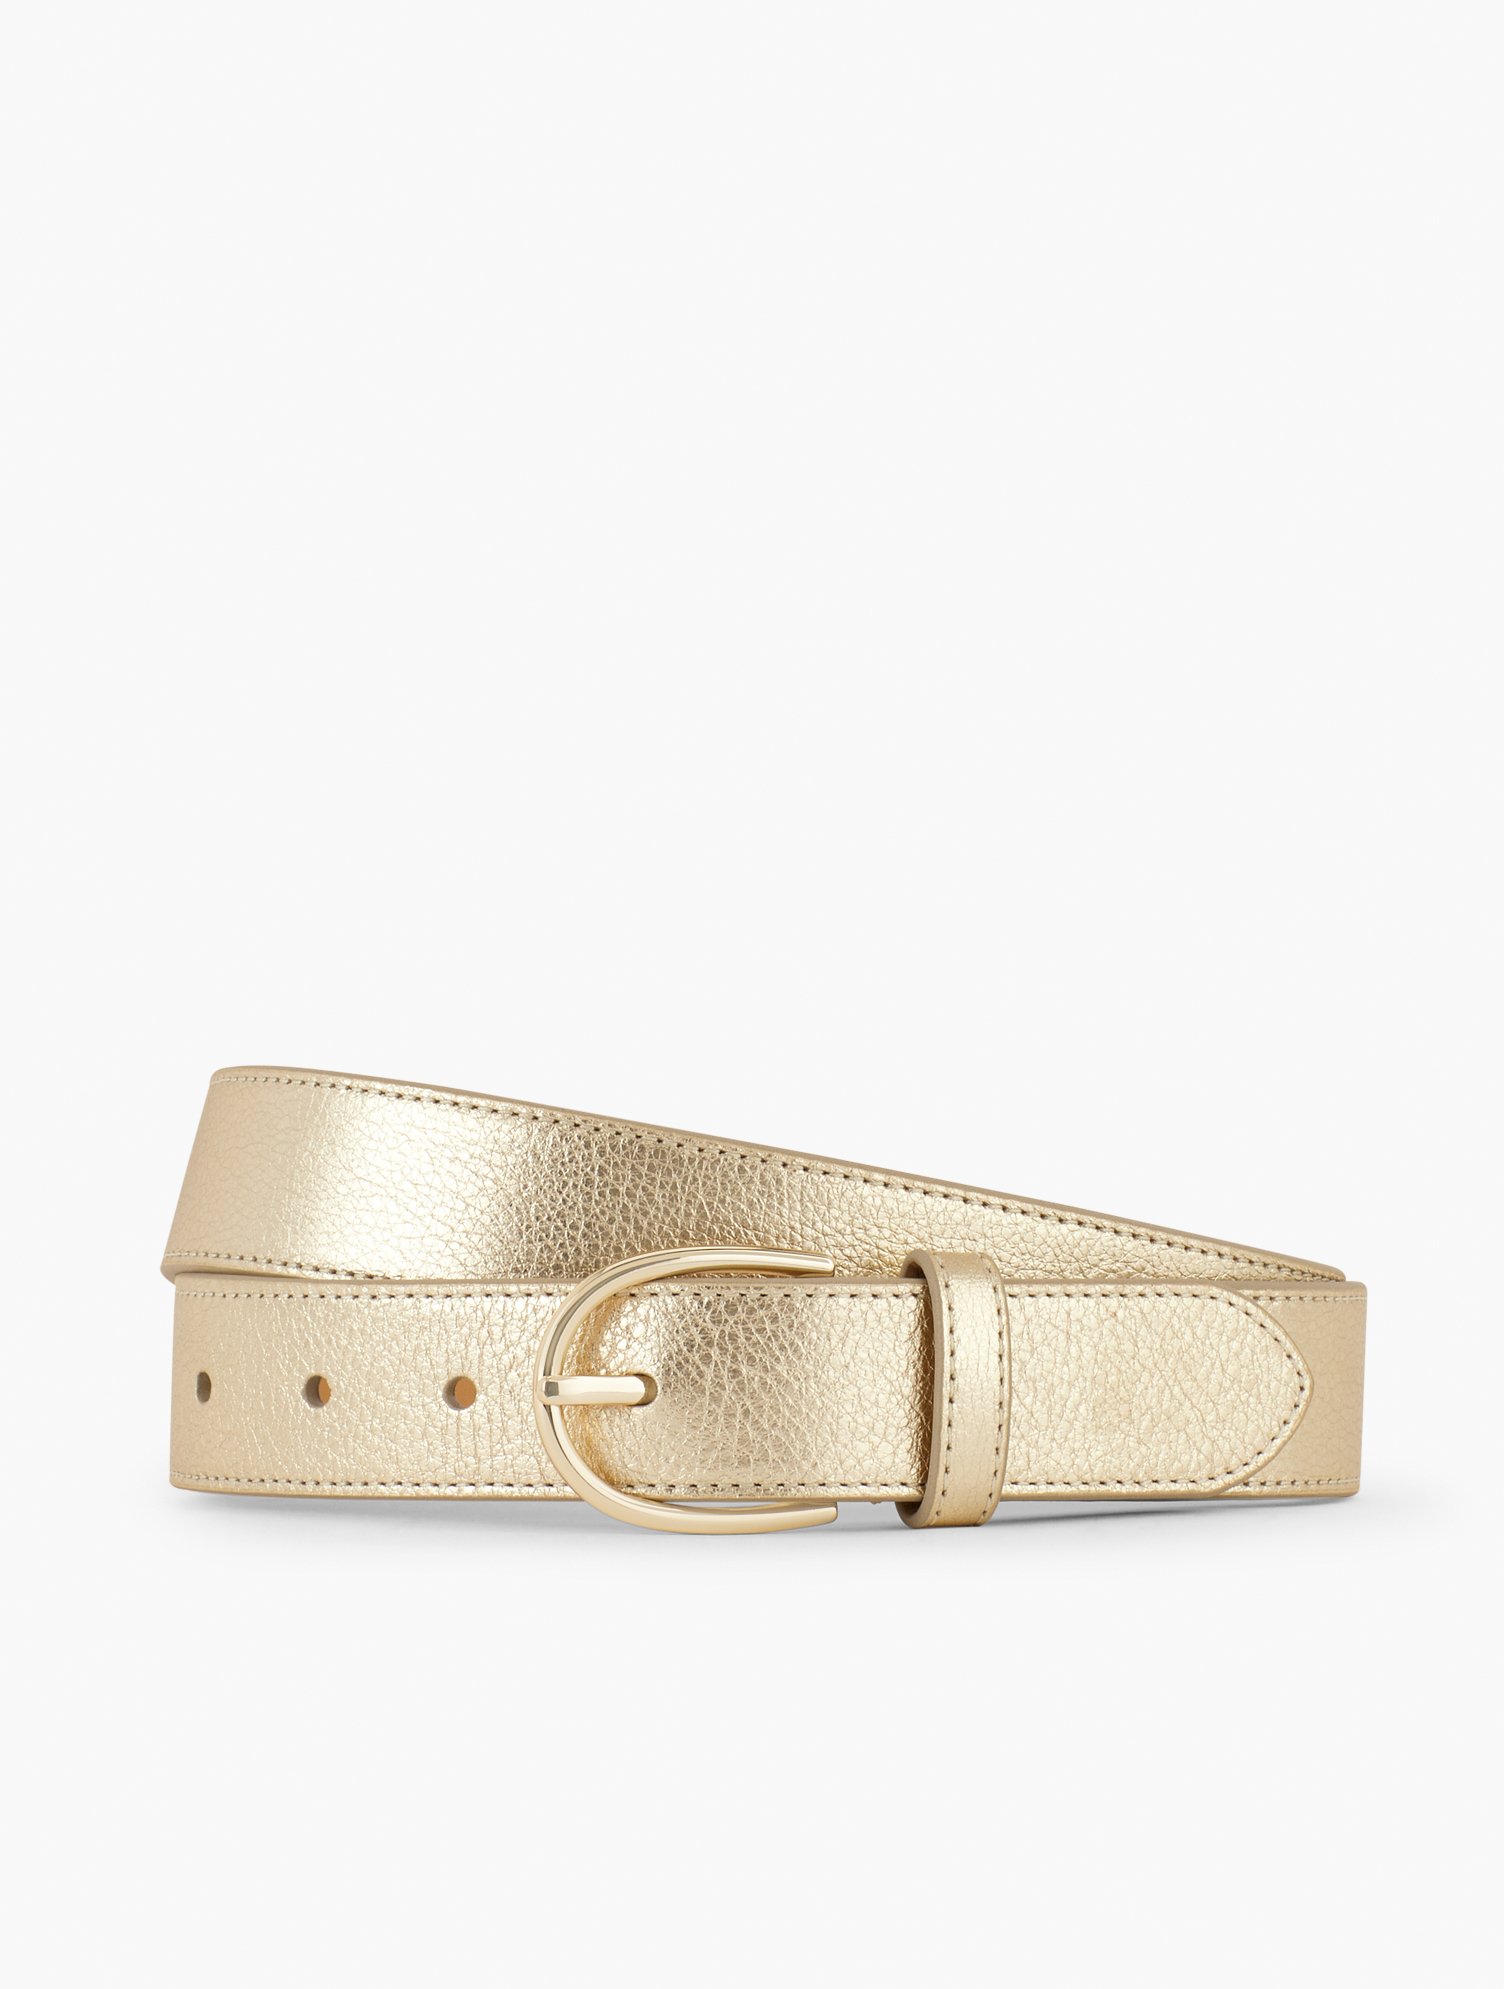 Talbots Metallic Leather Belt - Gold - Xs